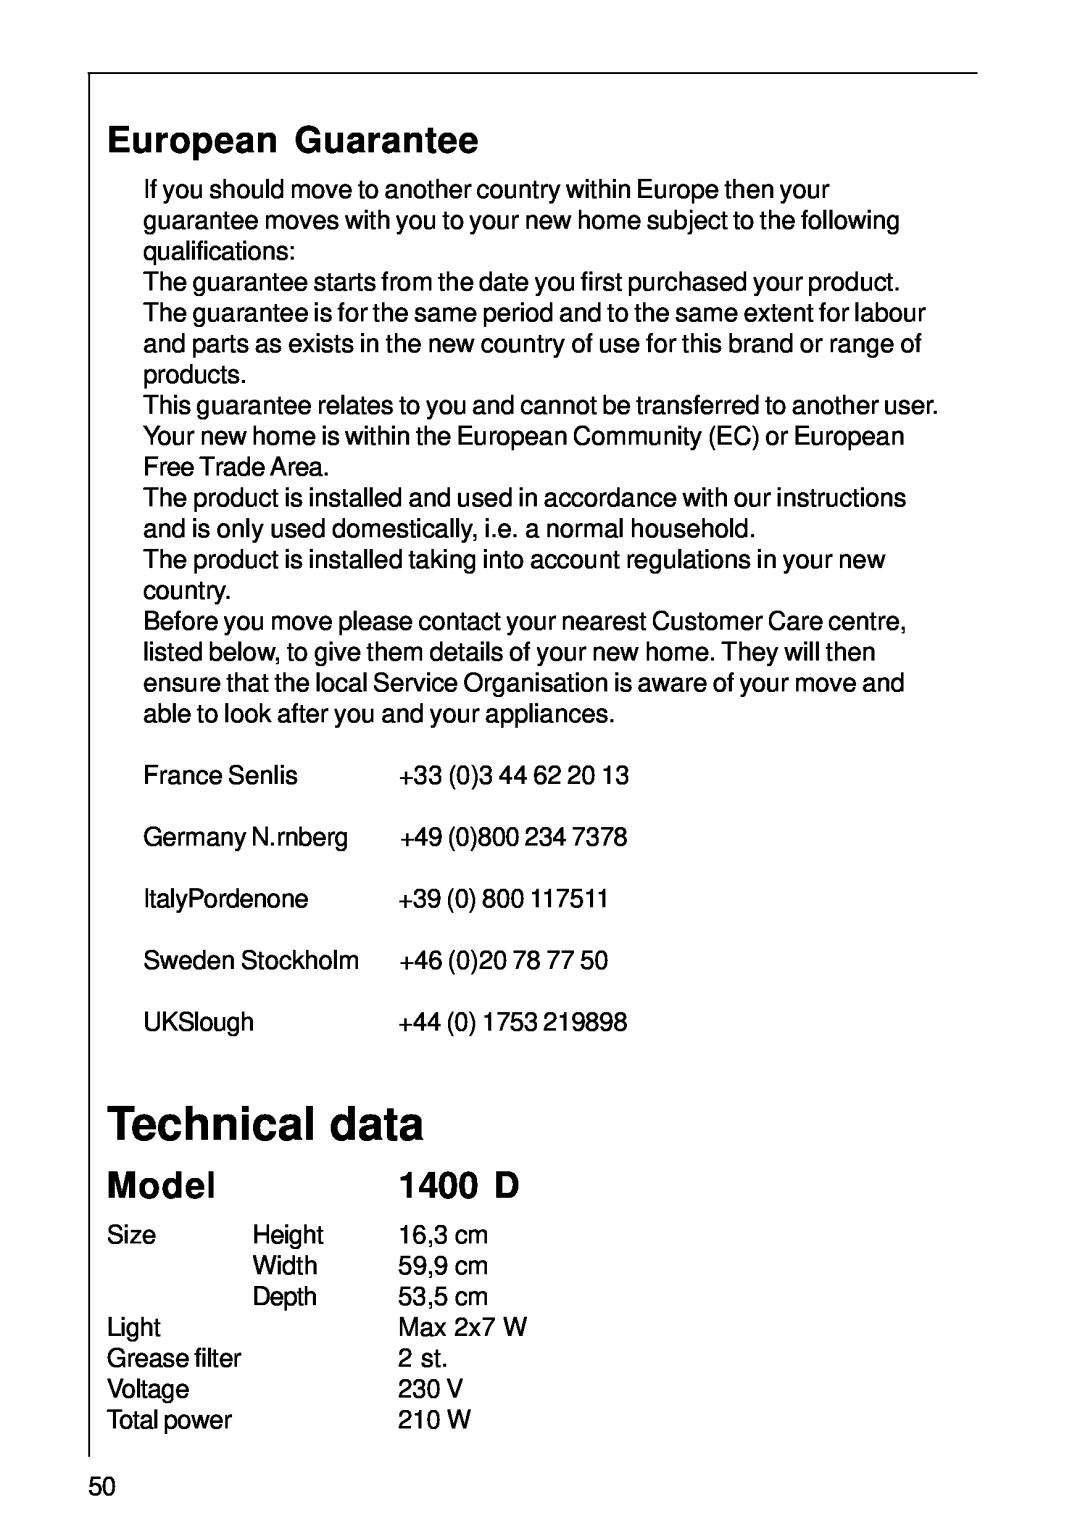 AEG 1400 D installation instructions Technical data, European Guarantee, Model 